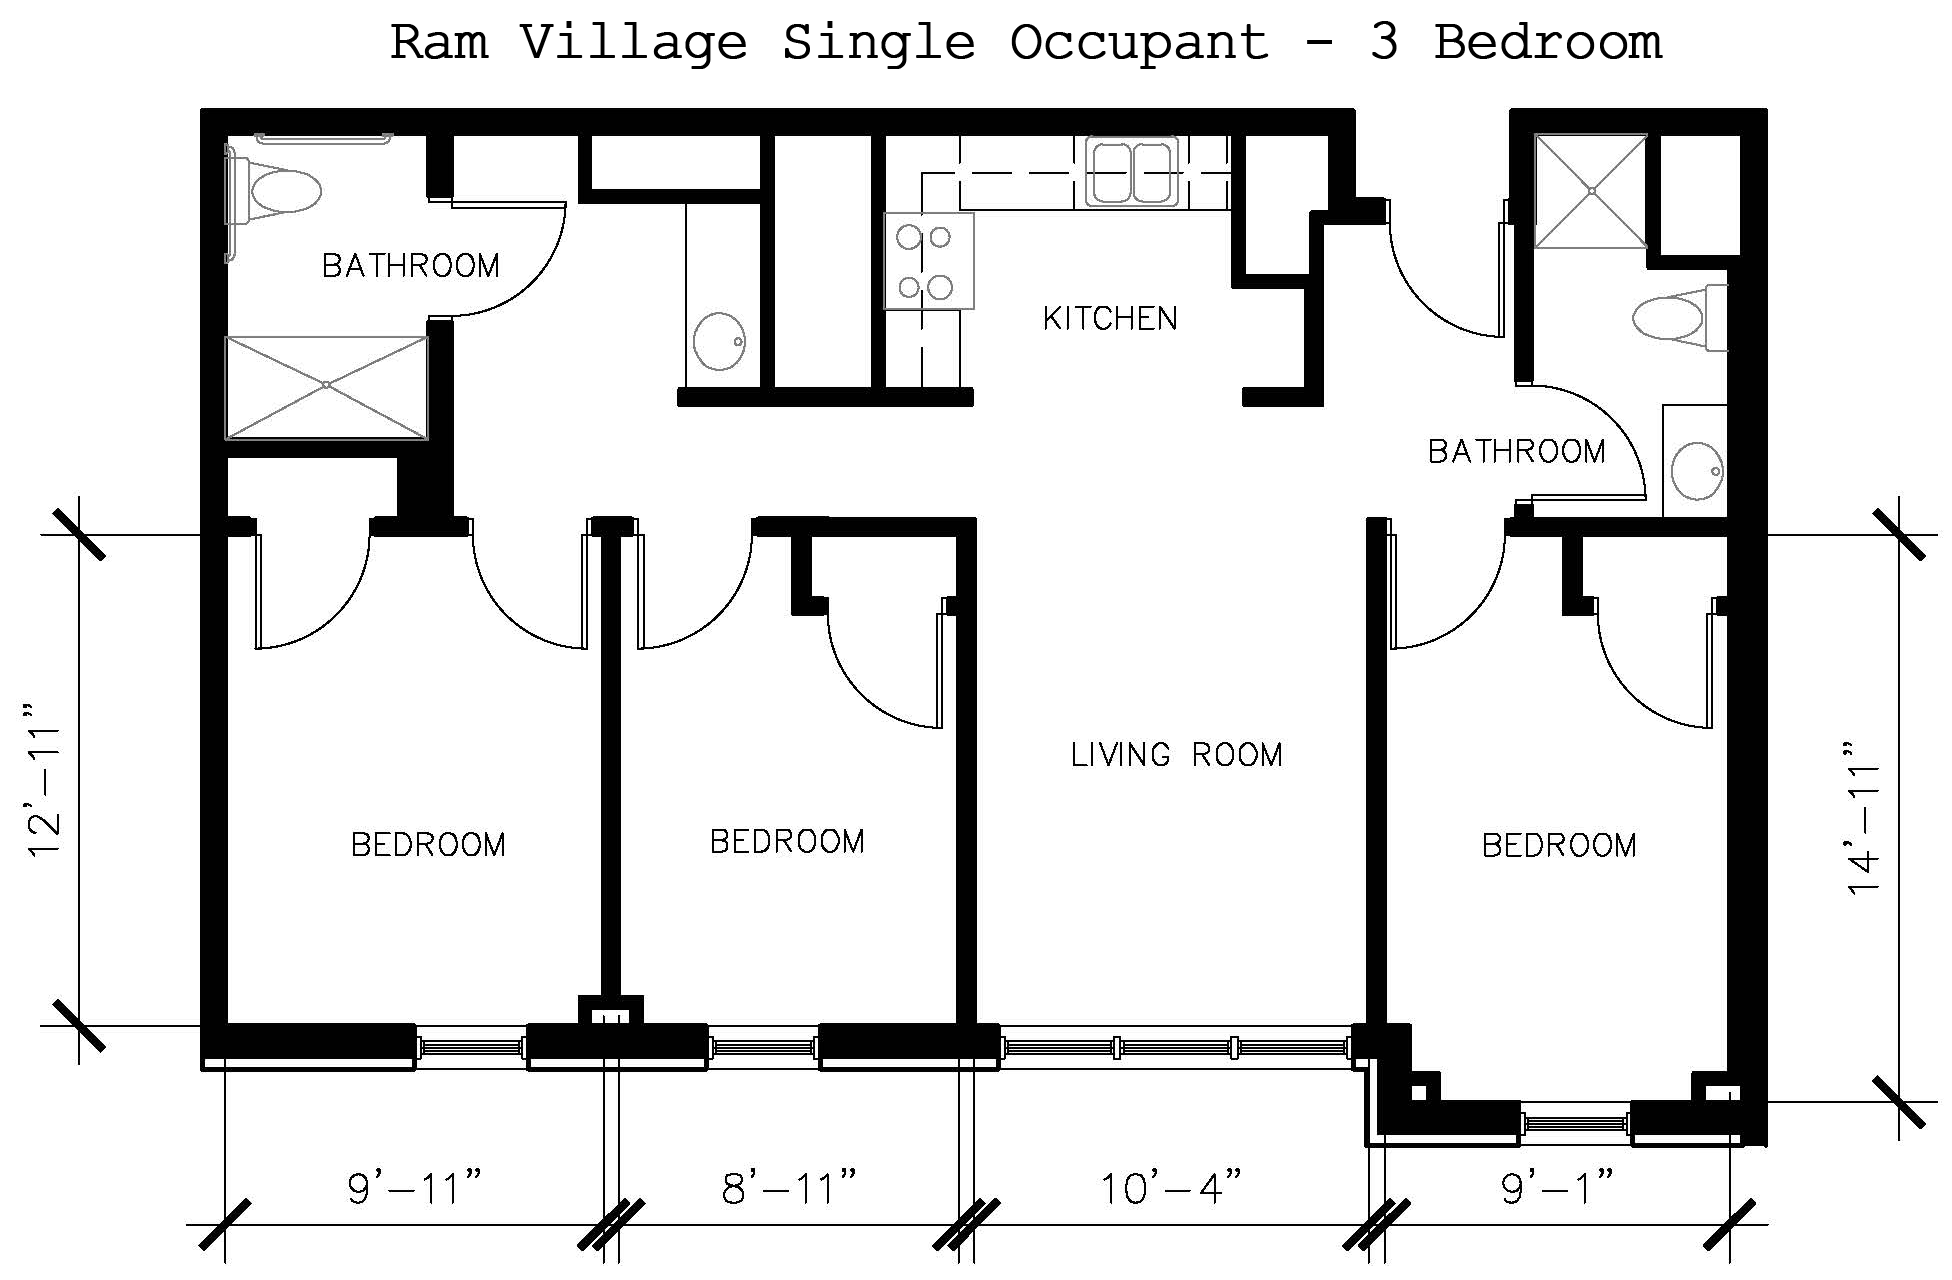 Ram Village Apartments Single Occupant (14 Bedrooms